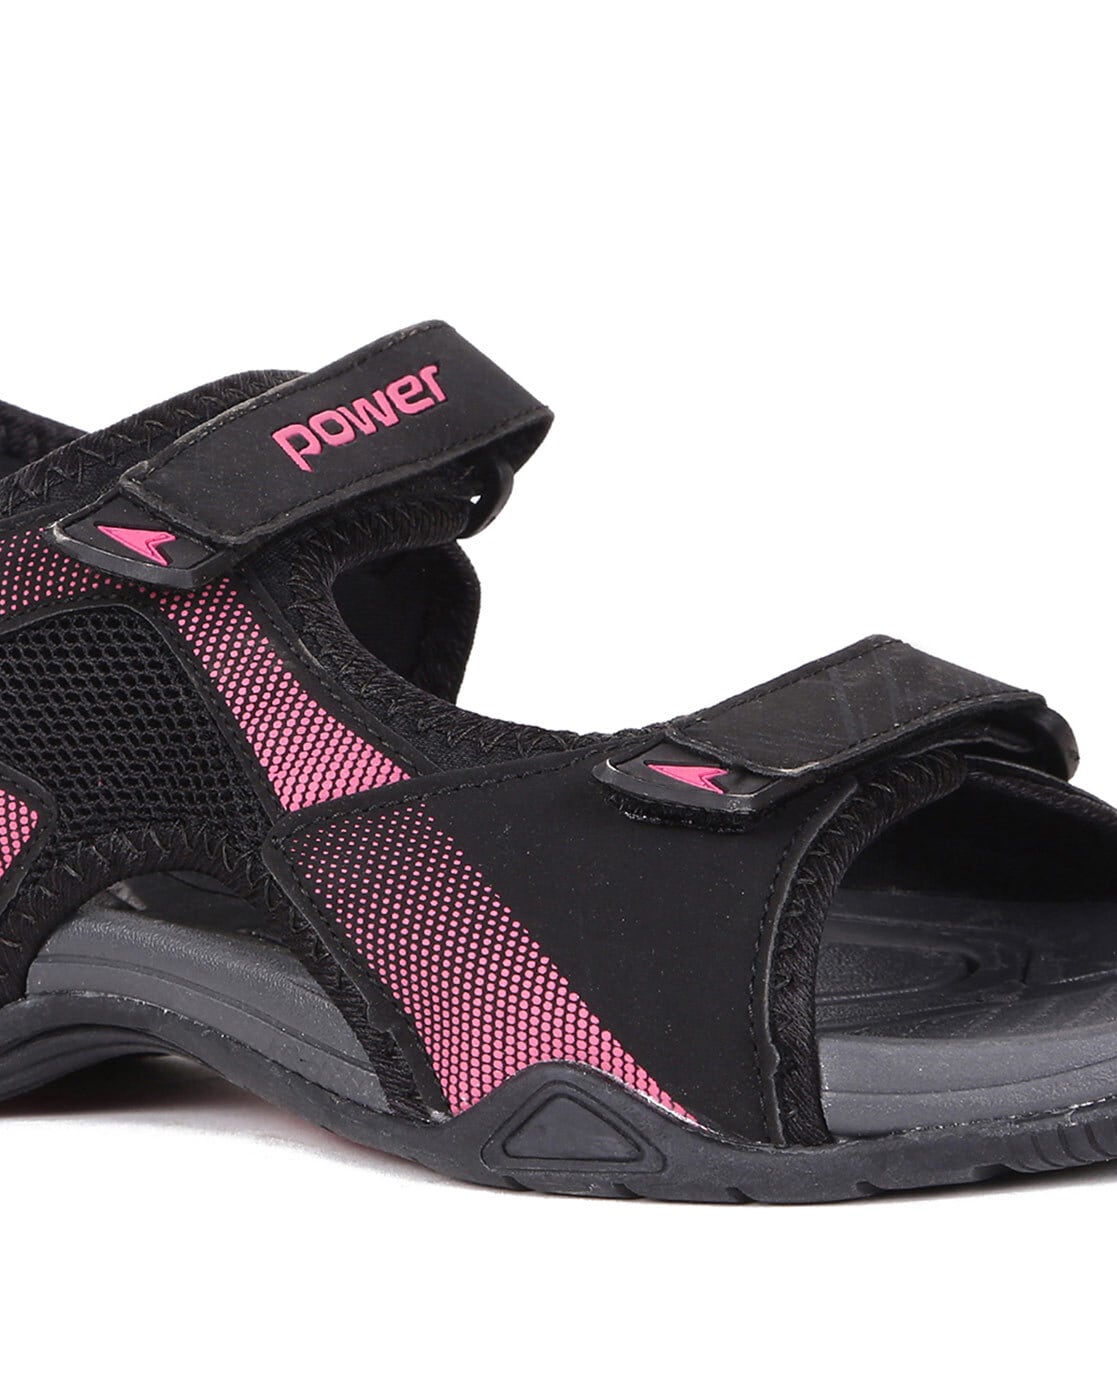 POWER Women Grey Sports Sandals - Buy POWER Women Grey Sports Sandals  Online at Best Price - Shop Online for Footwears in India | Flipkart.com